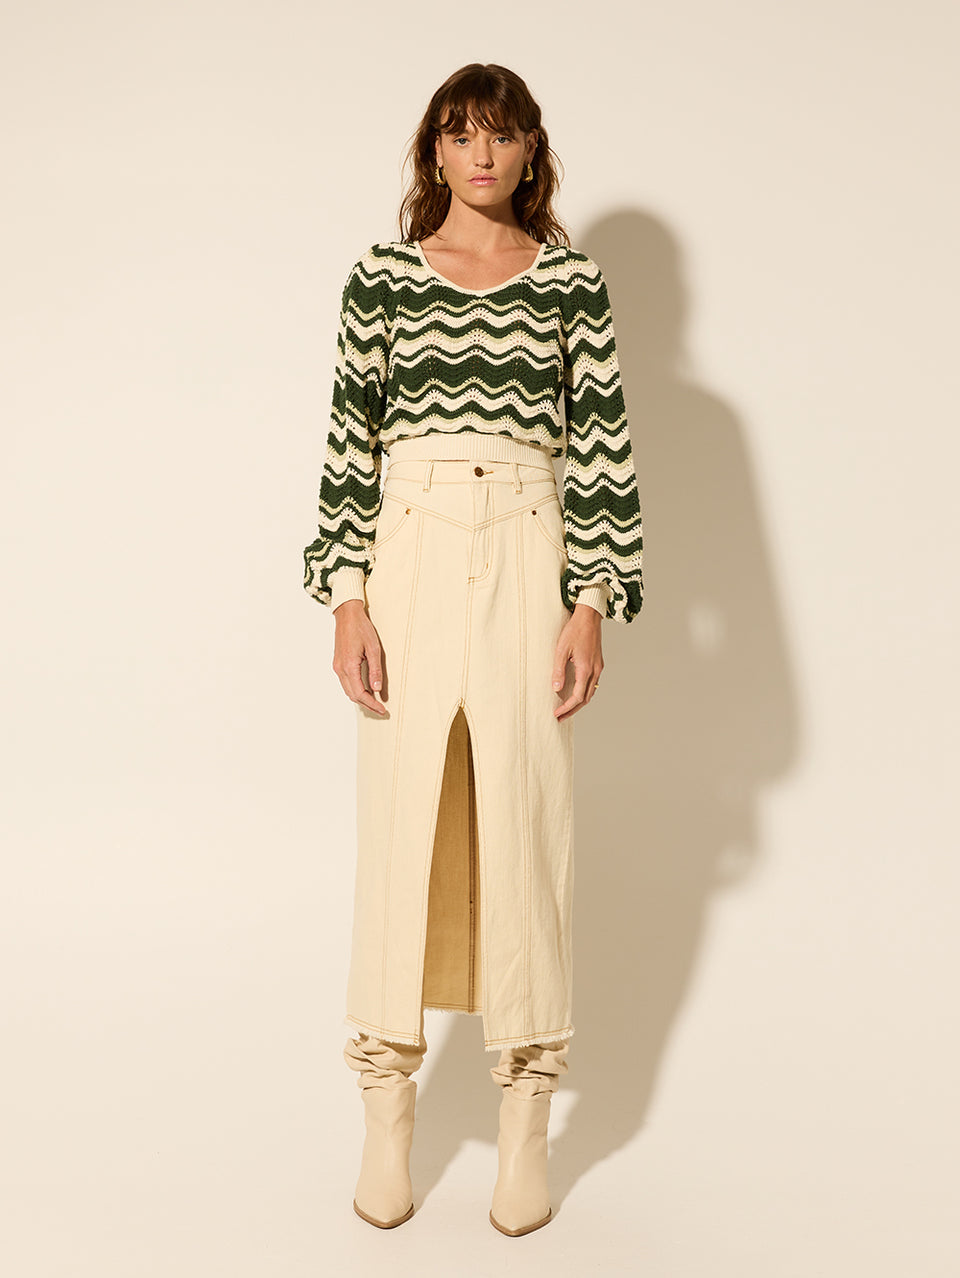 Marcella Knit Top KIVARI | Model wears green and cream knit top